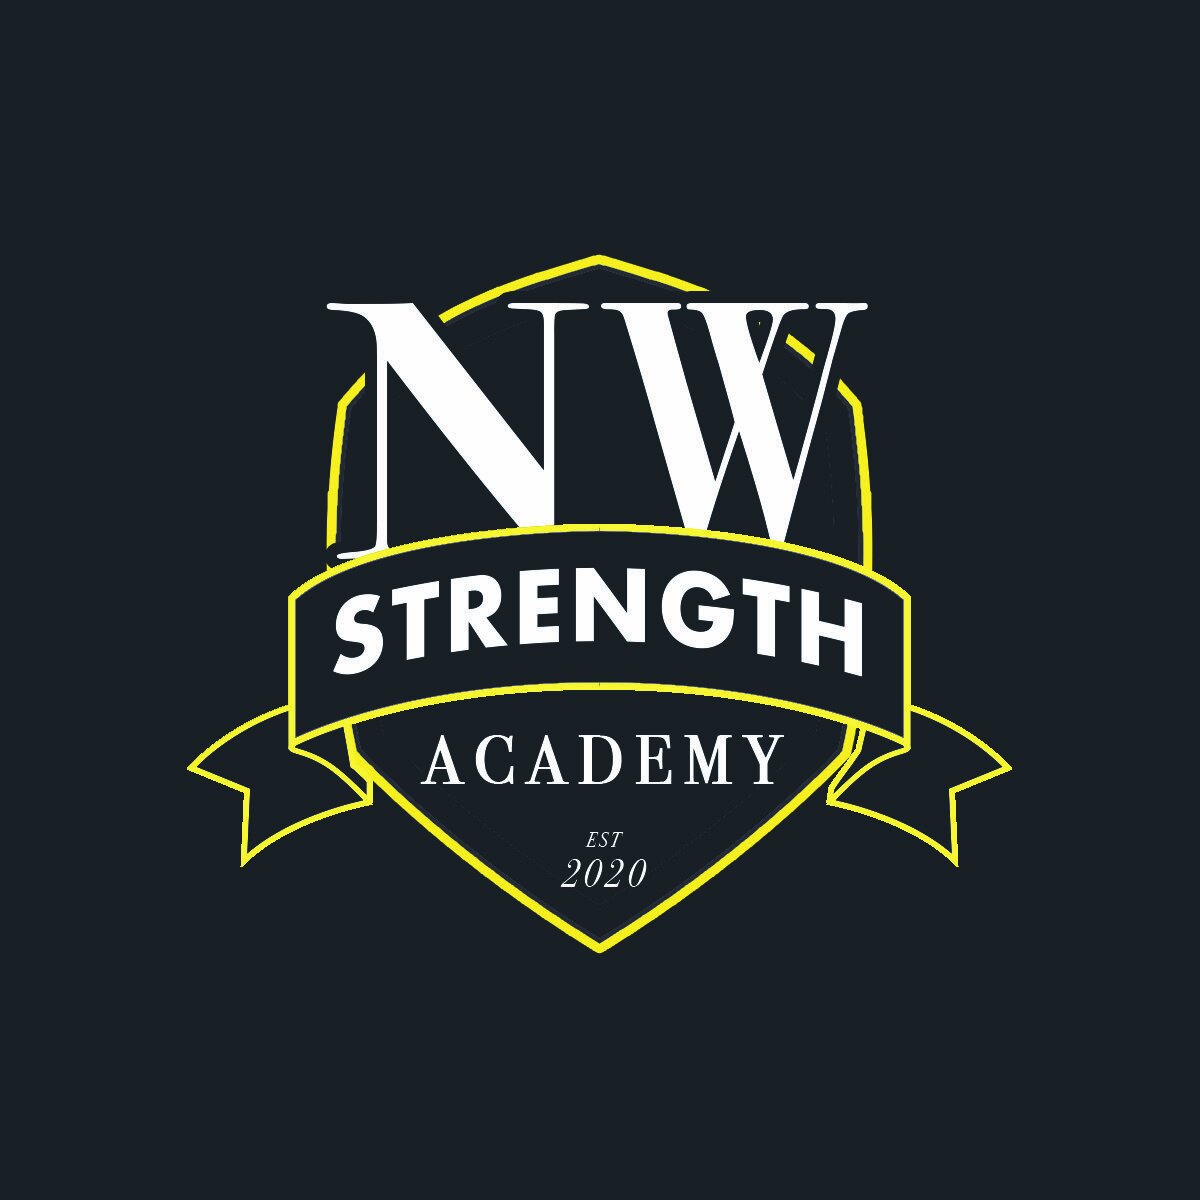 NW Strength Academy